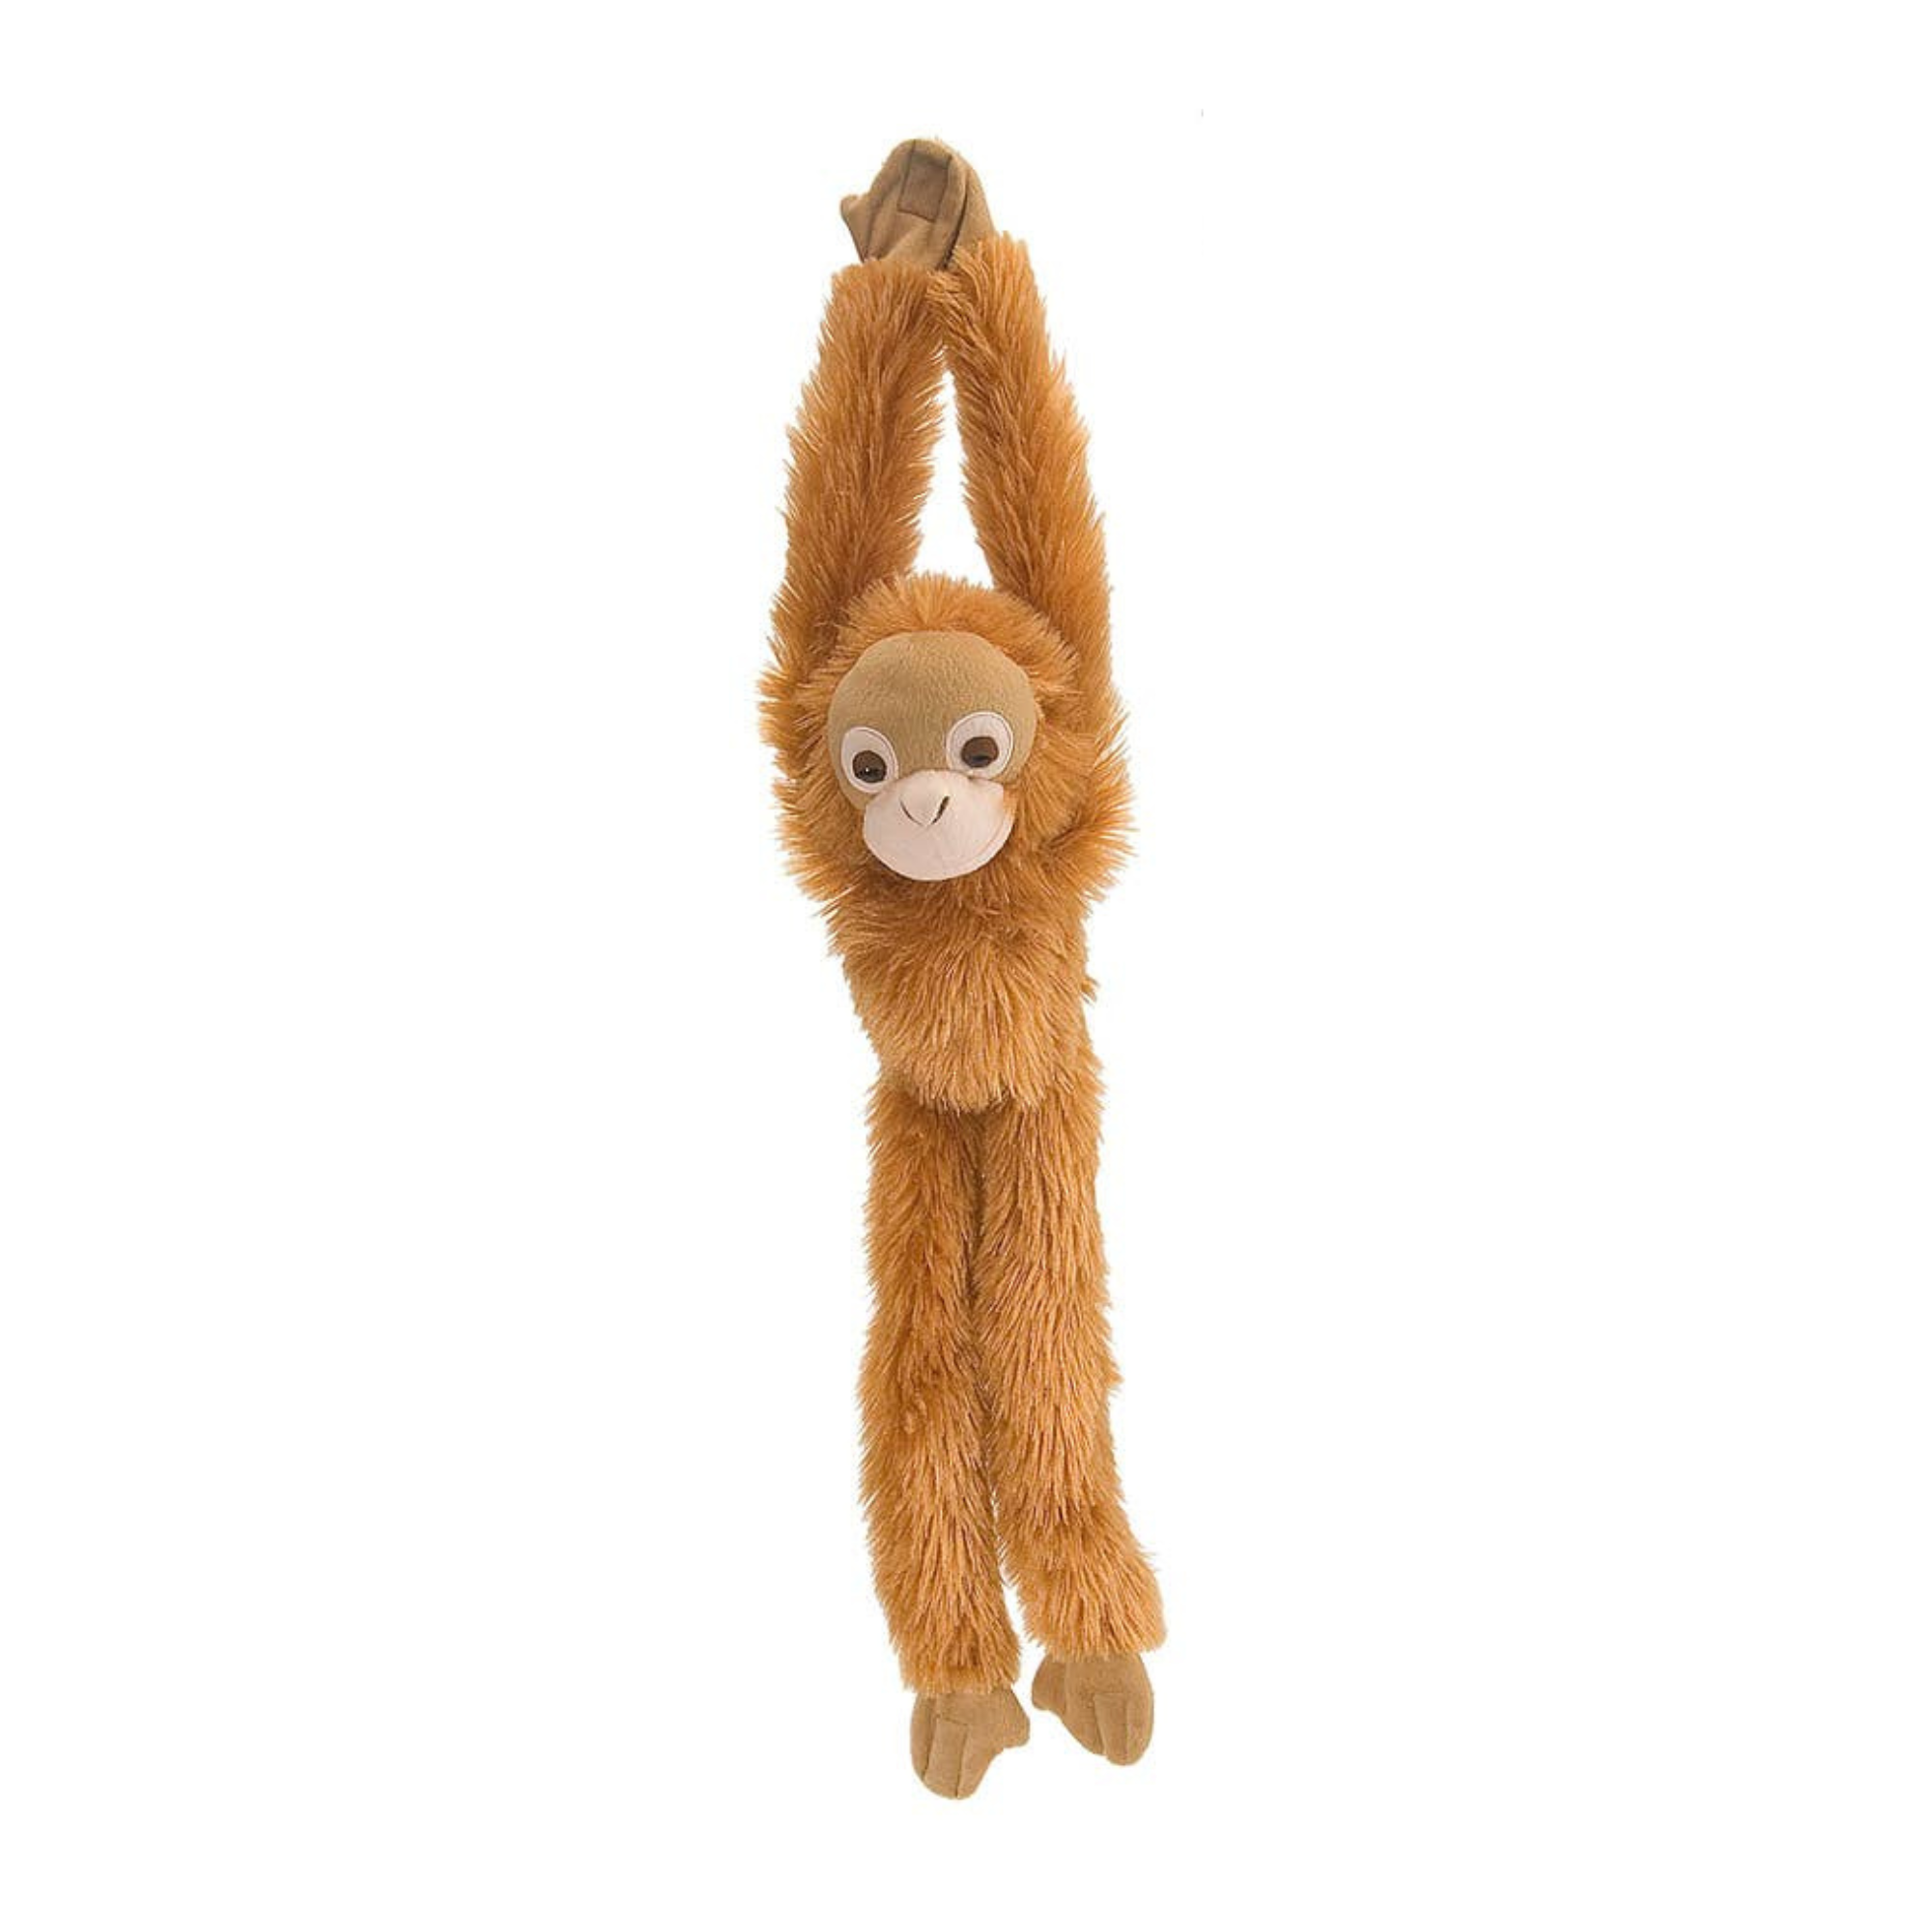 Hanging Orangutan Stuffed Animal 20"